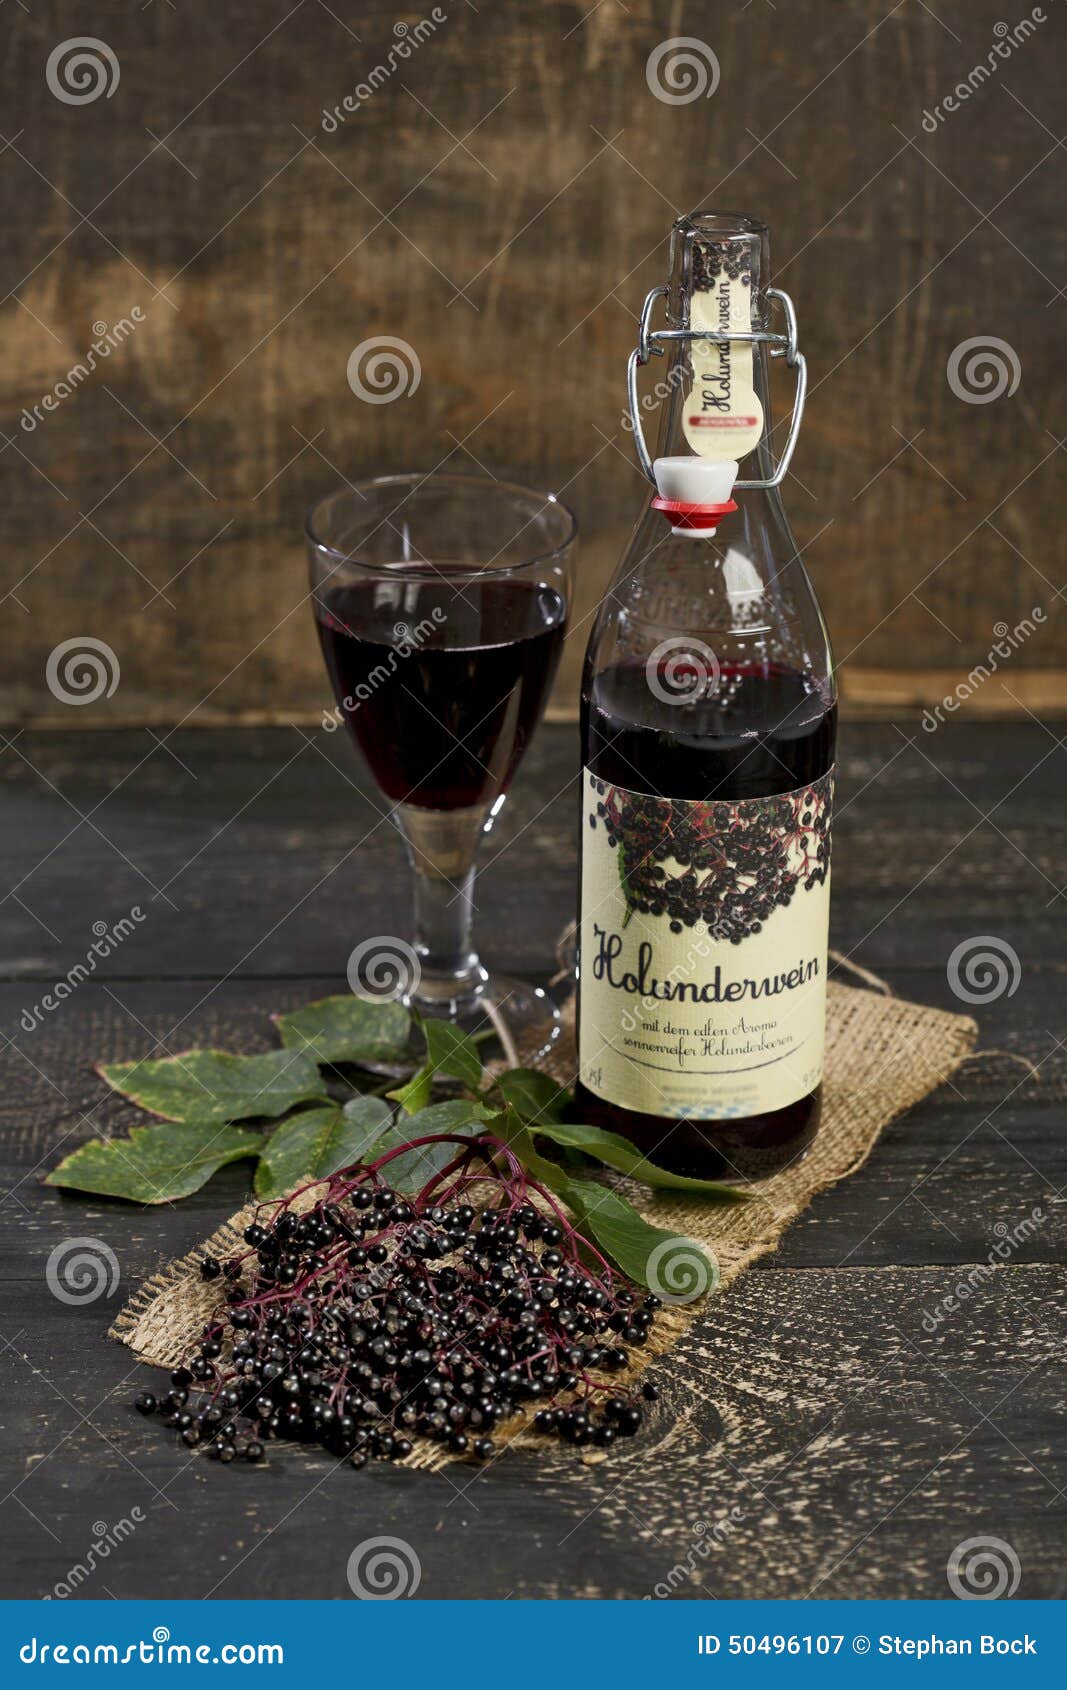 Elderberry Wine and Elderberries on Wooden Table Stock Image - Image of ...